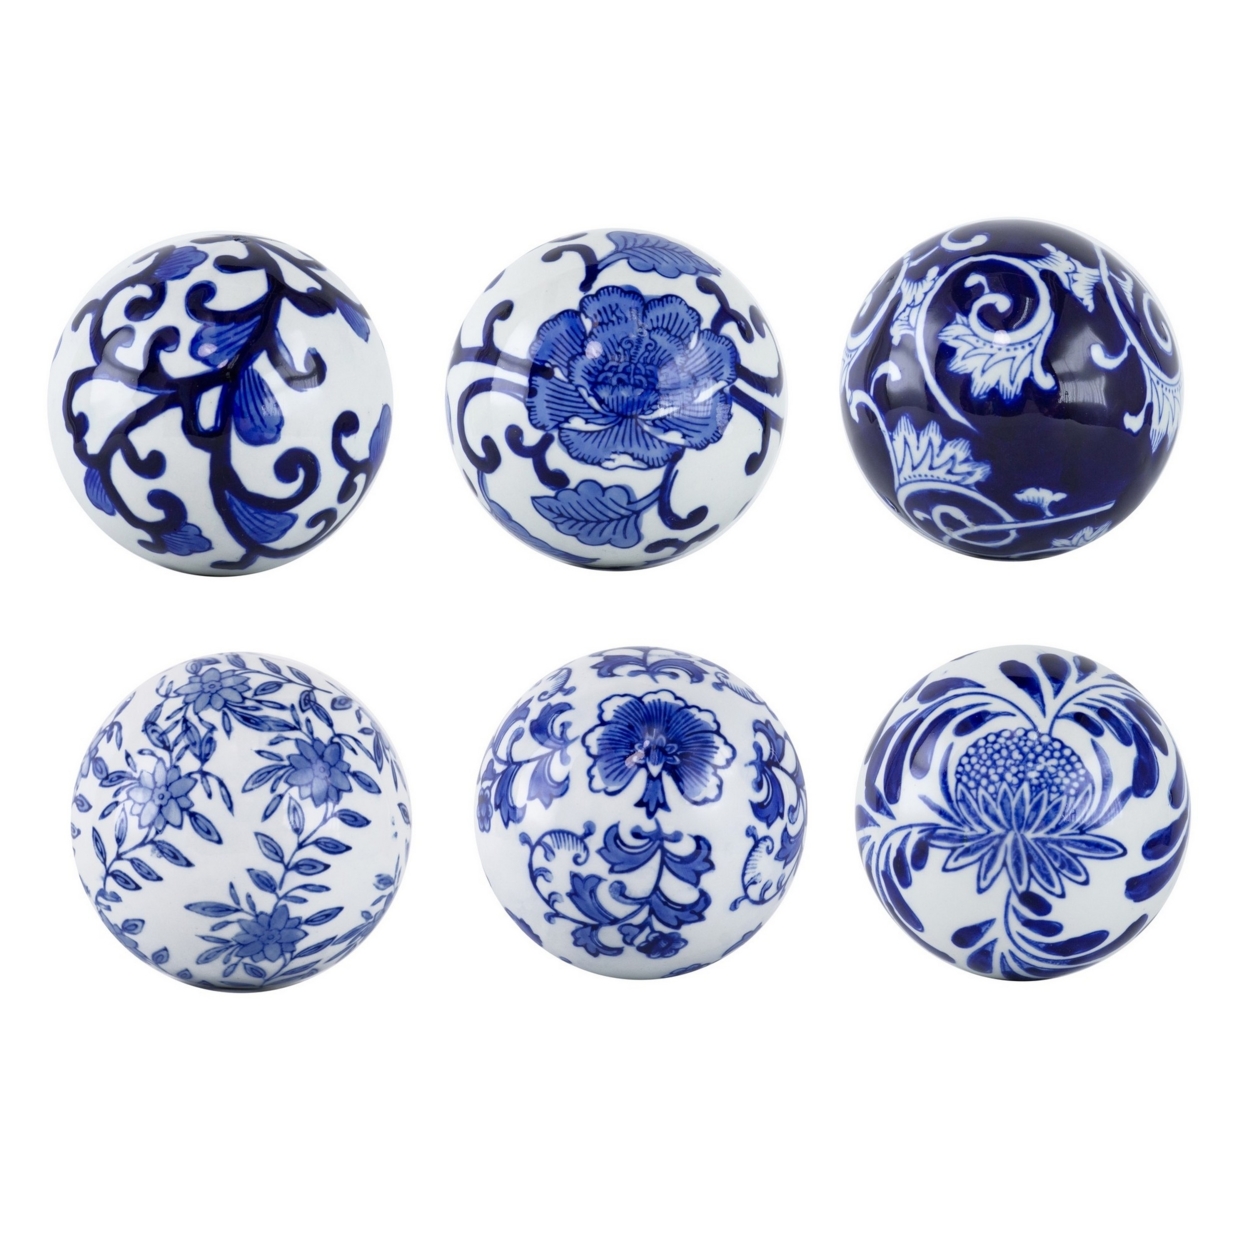 4 Inch Decorative Porcelain Stones, Blue And White Print, Set Of 6- Saltoro Sherpi